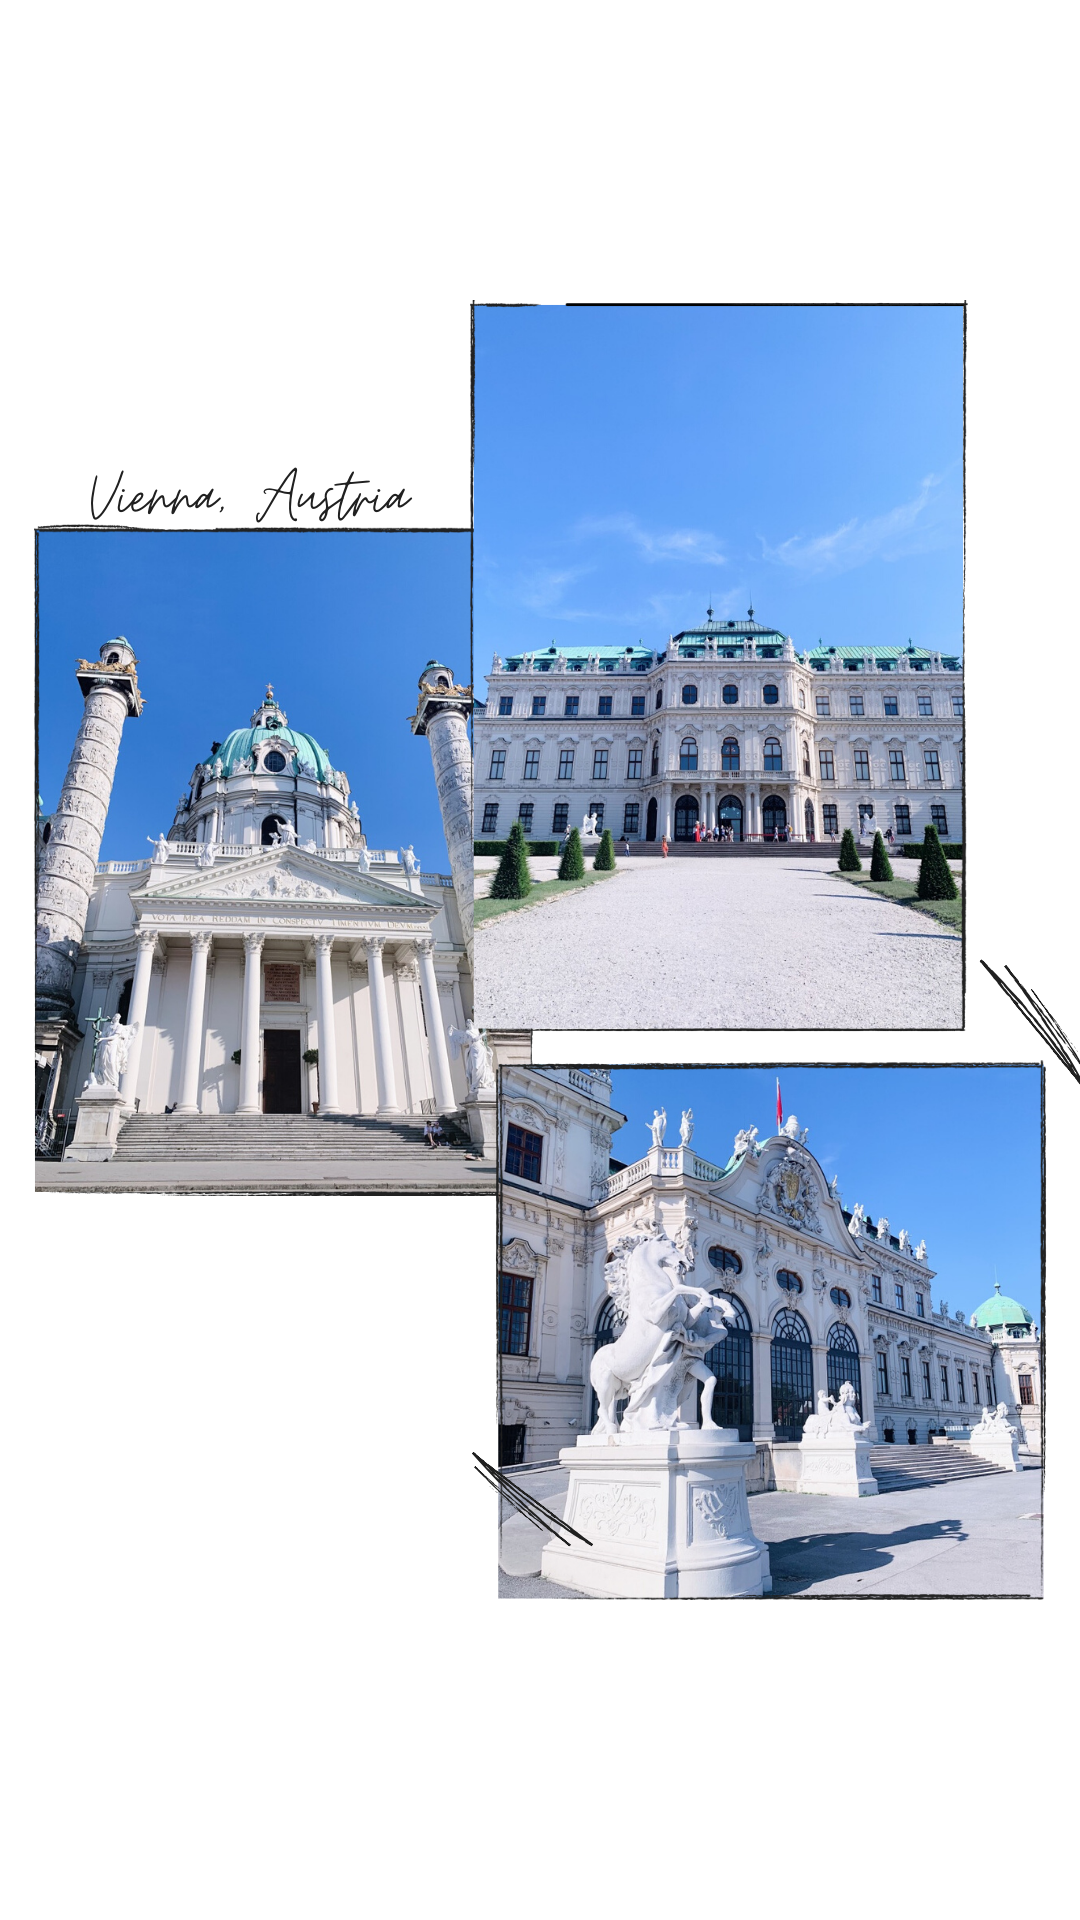 Top Left: Karlskirche; Top Right: Belvedere Palace; Bottom Right: Belvedere Palace.